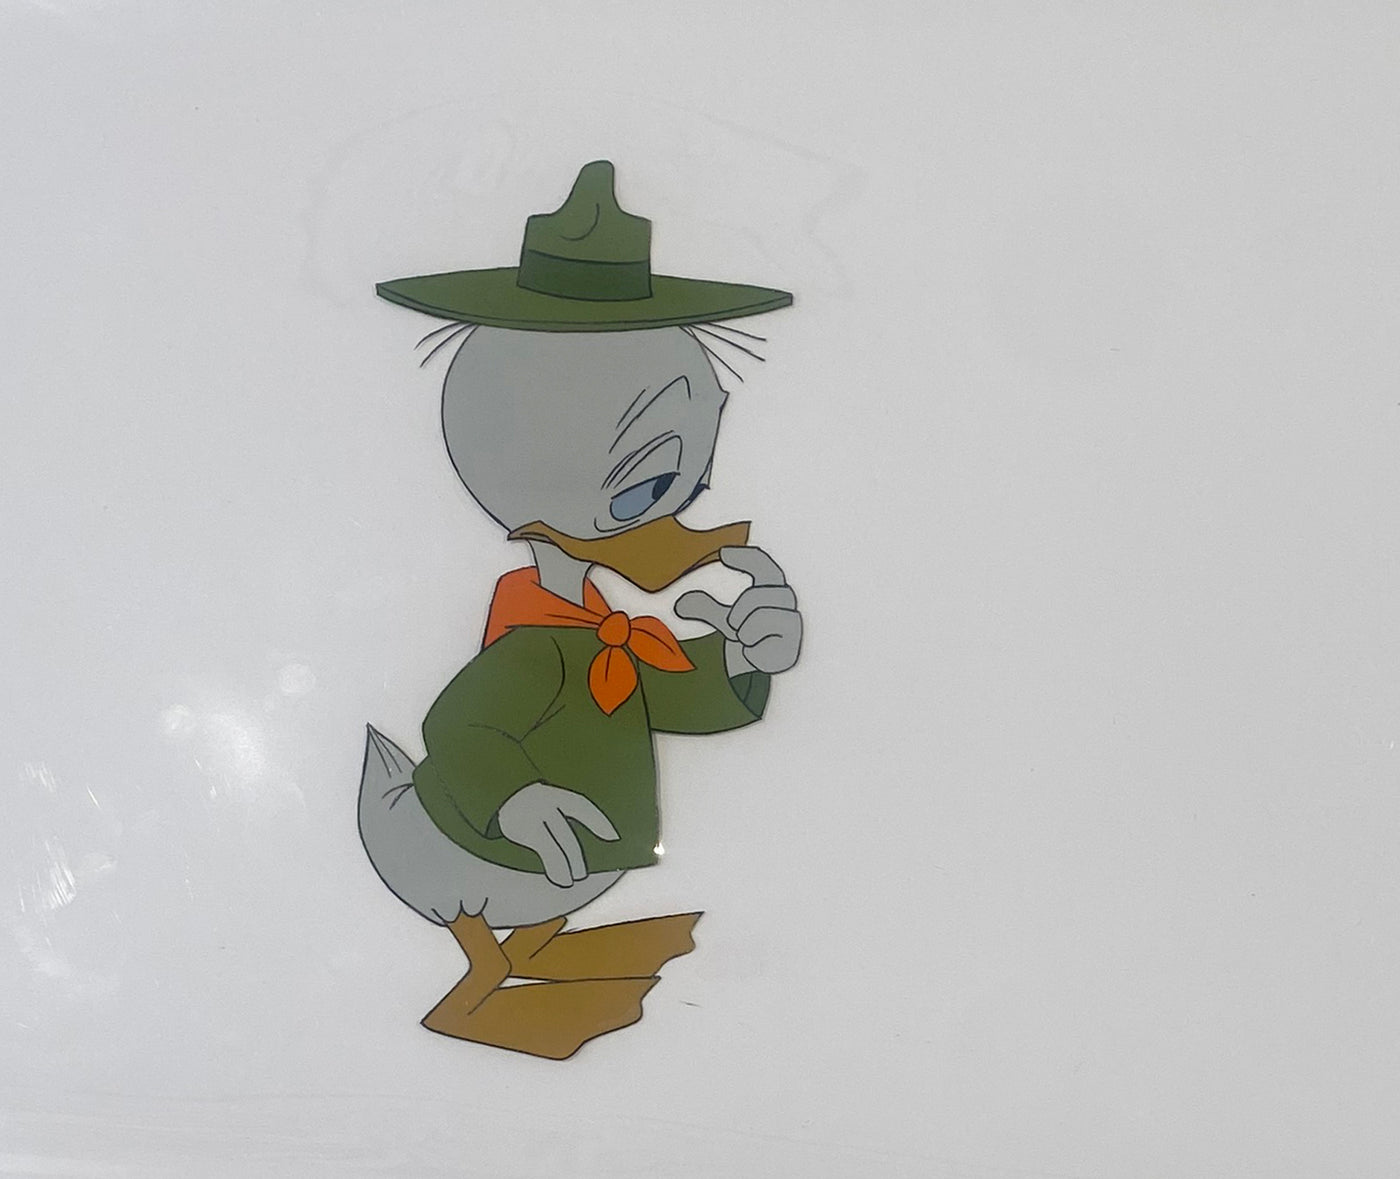 Original Walt Disney Production Cel featuring Dewey Duck